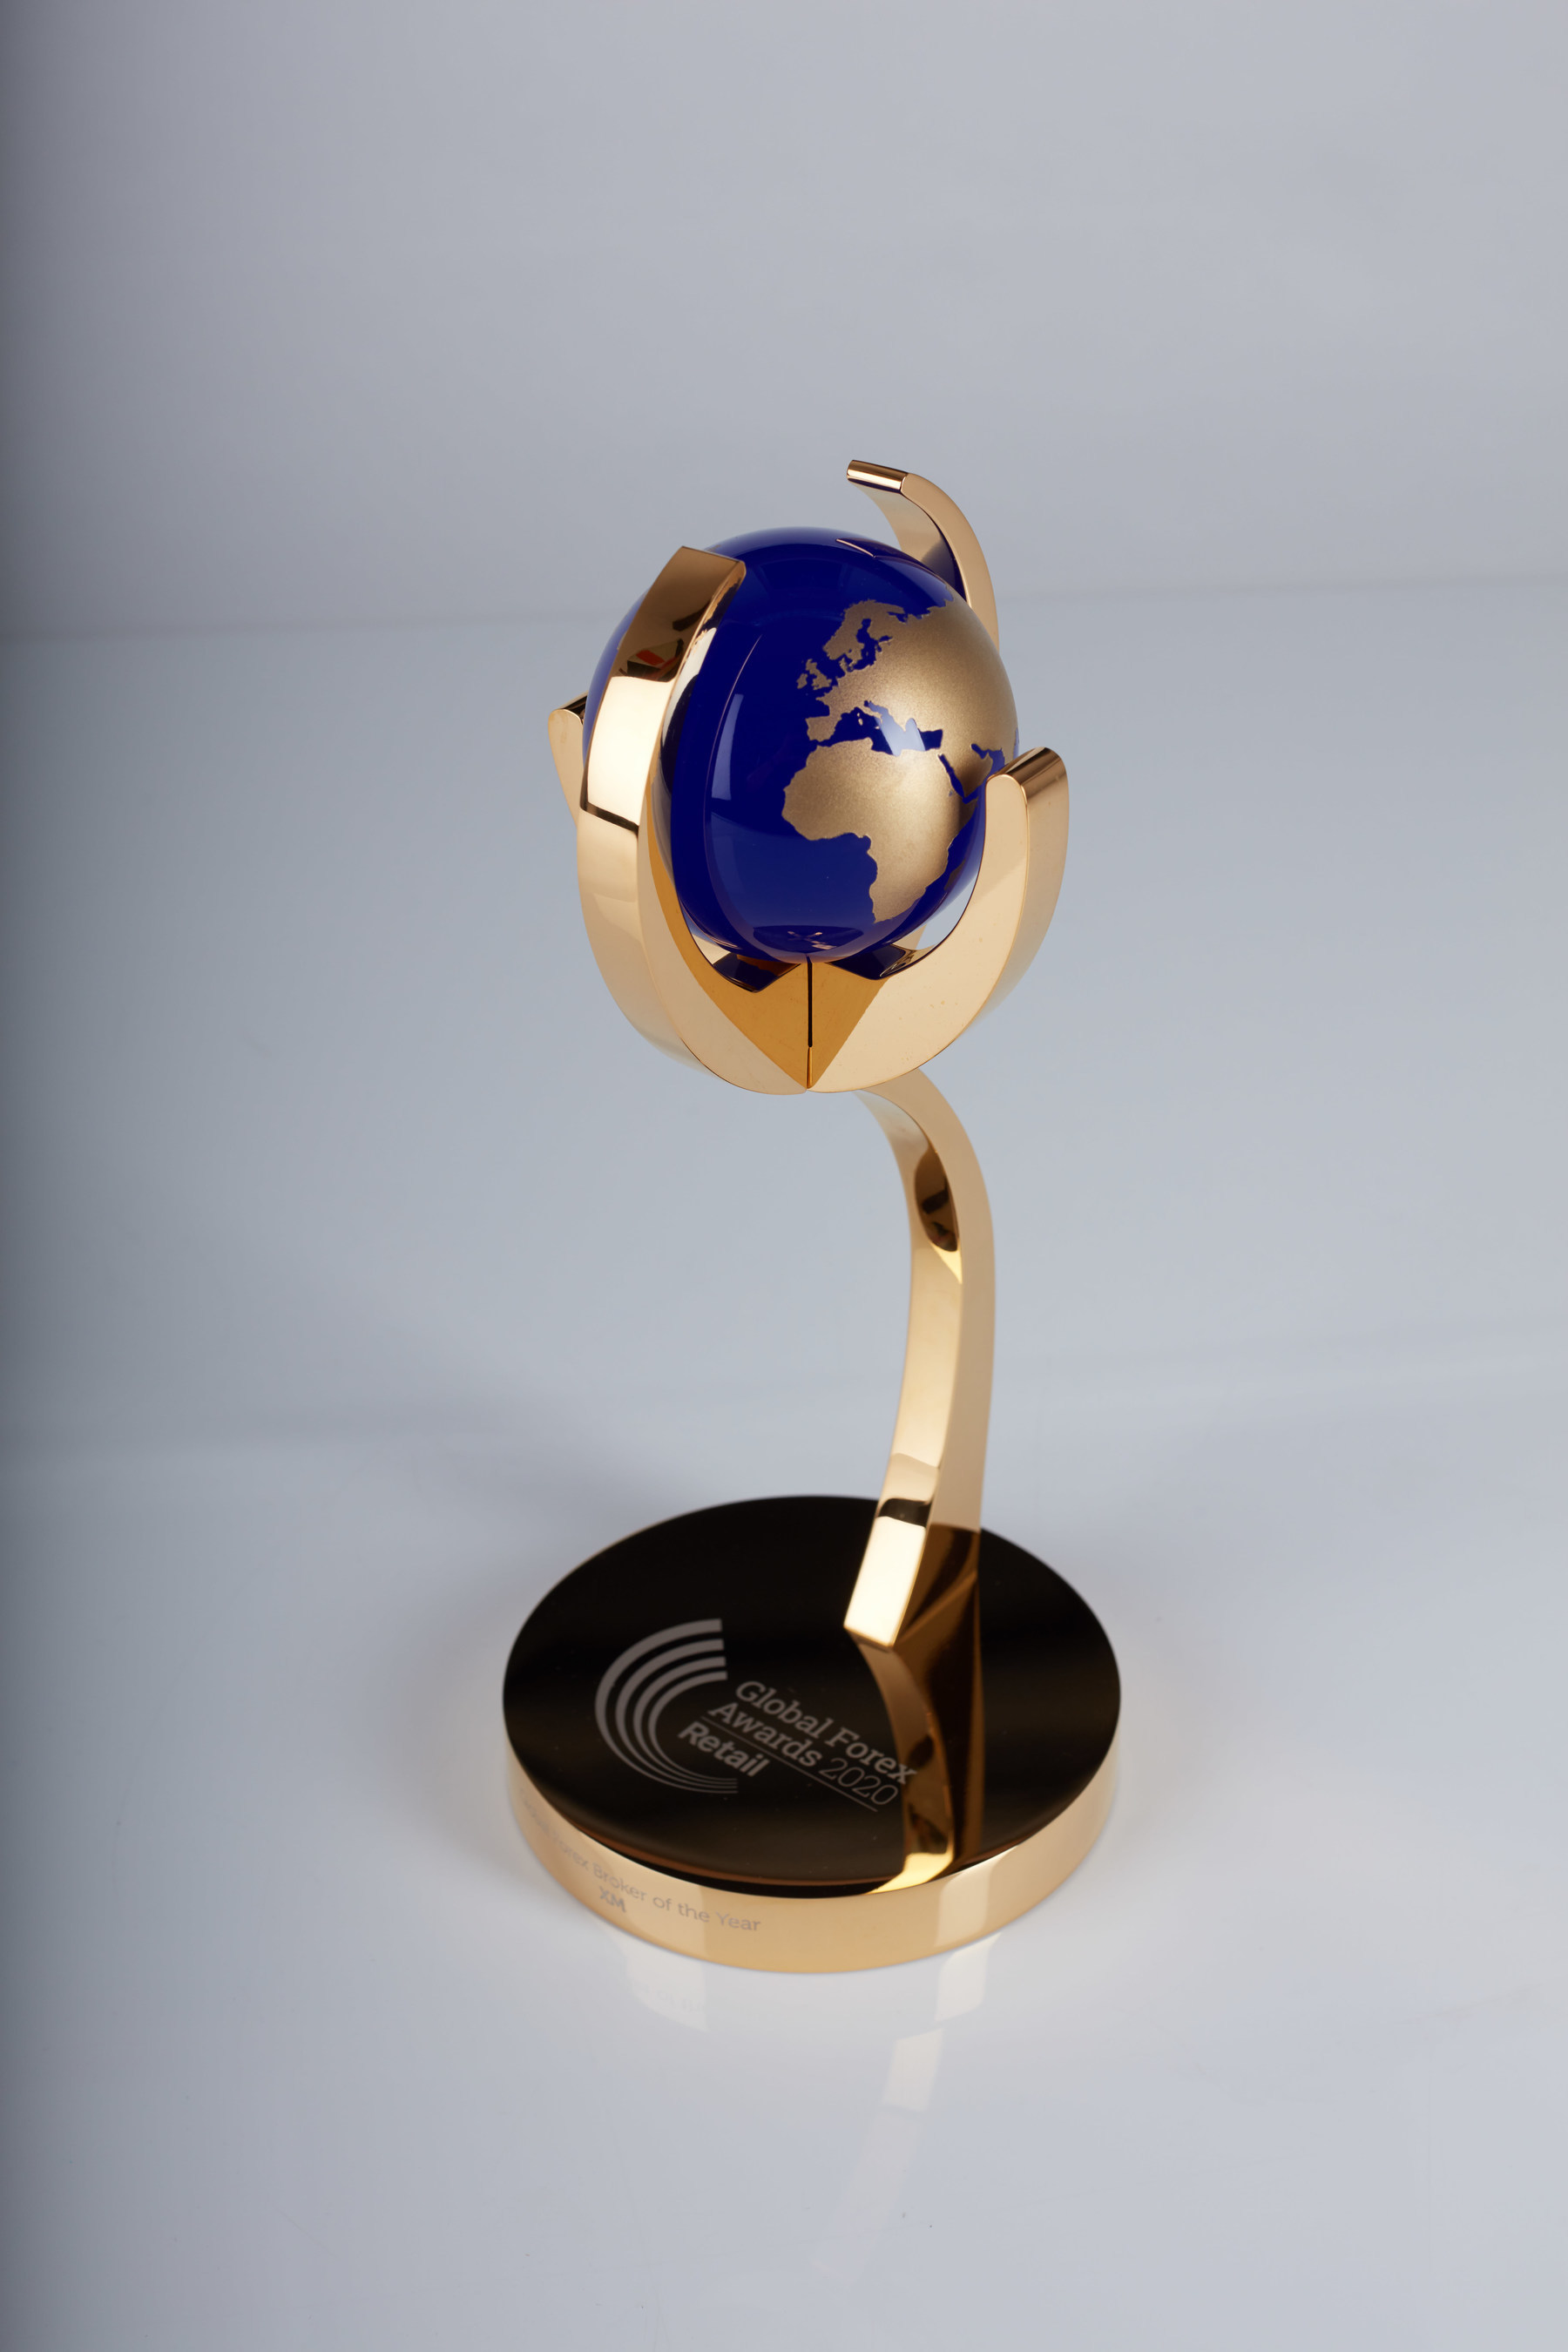 Holiston Media announces the Global Forex Awards 2020 - Retail winners - PR  Newswire APAC